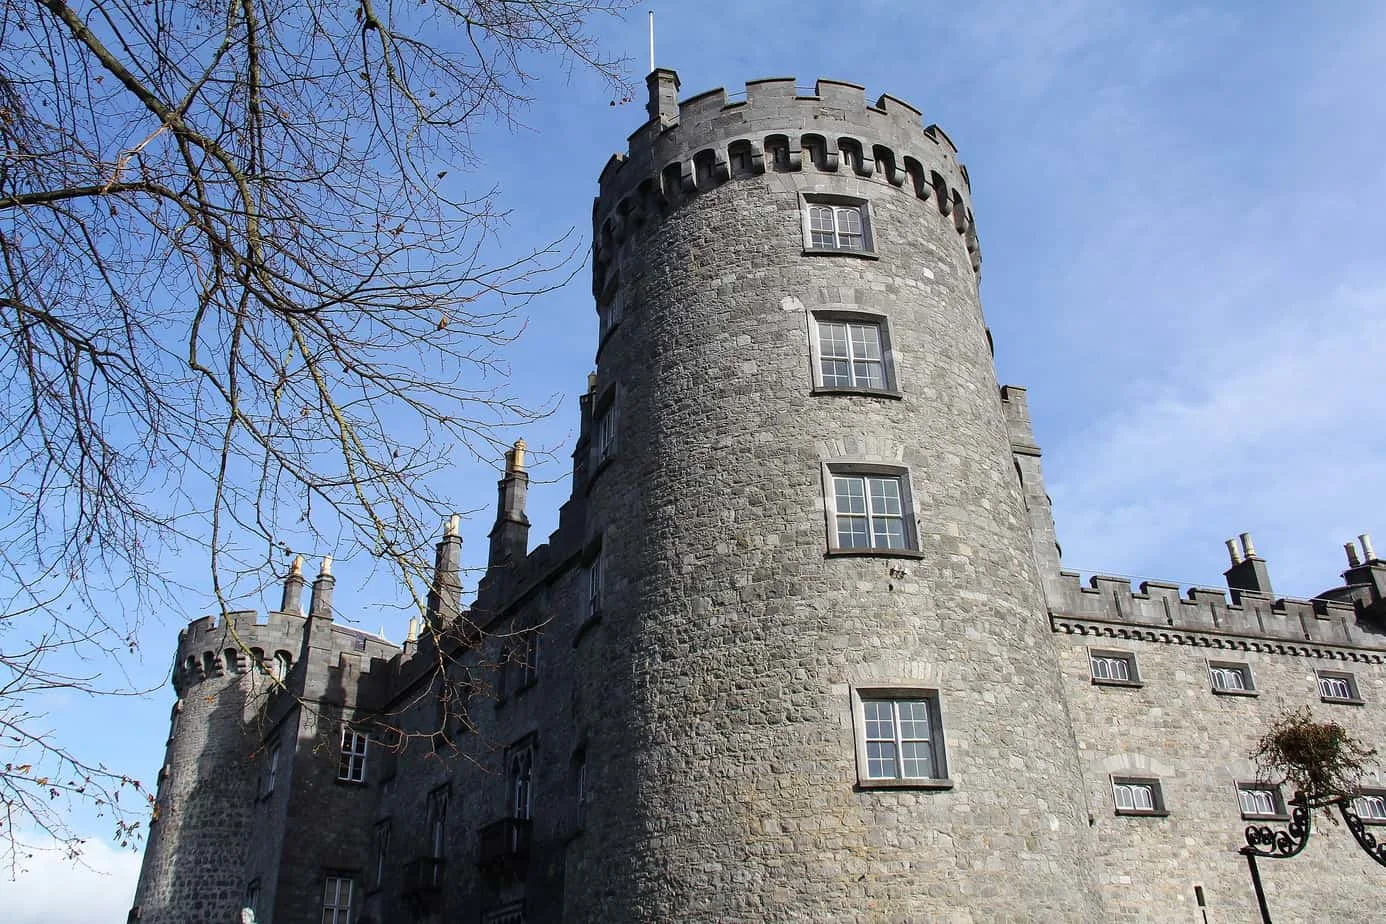 The great Kilkenny Castle